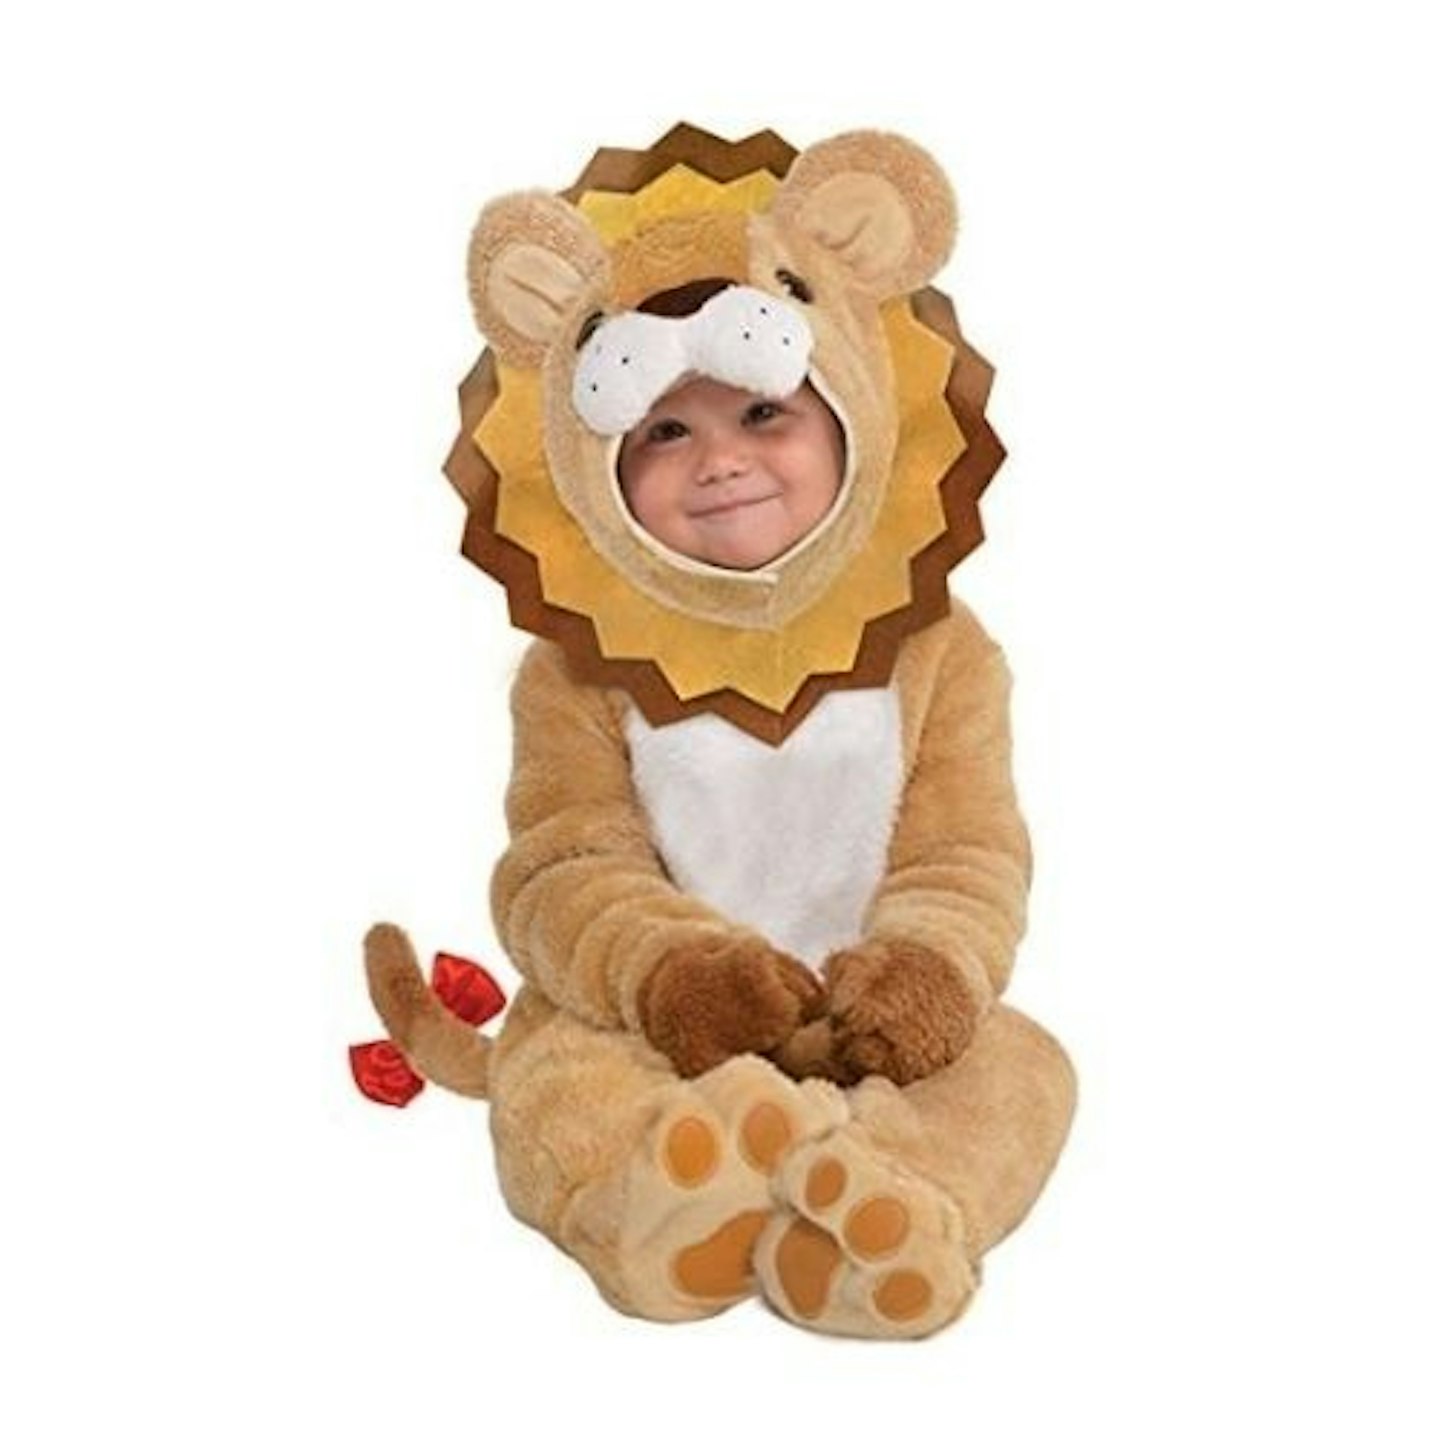 Baby Lion costume